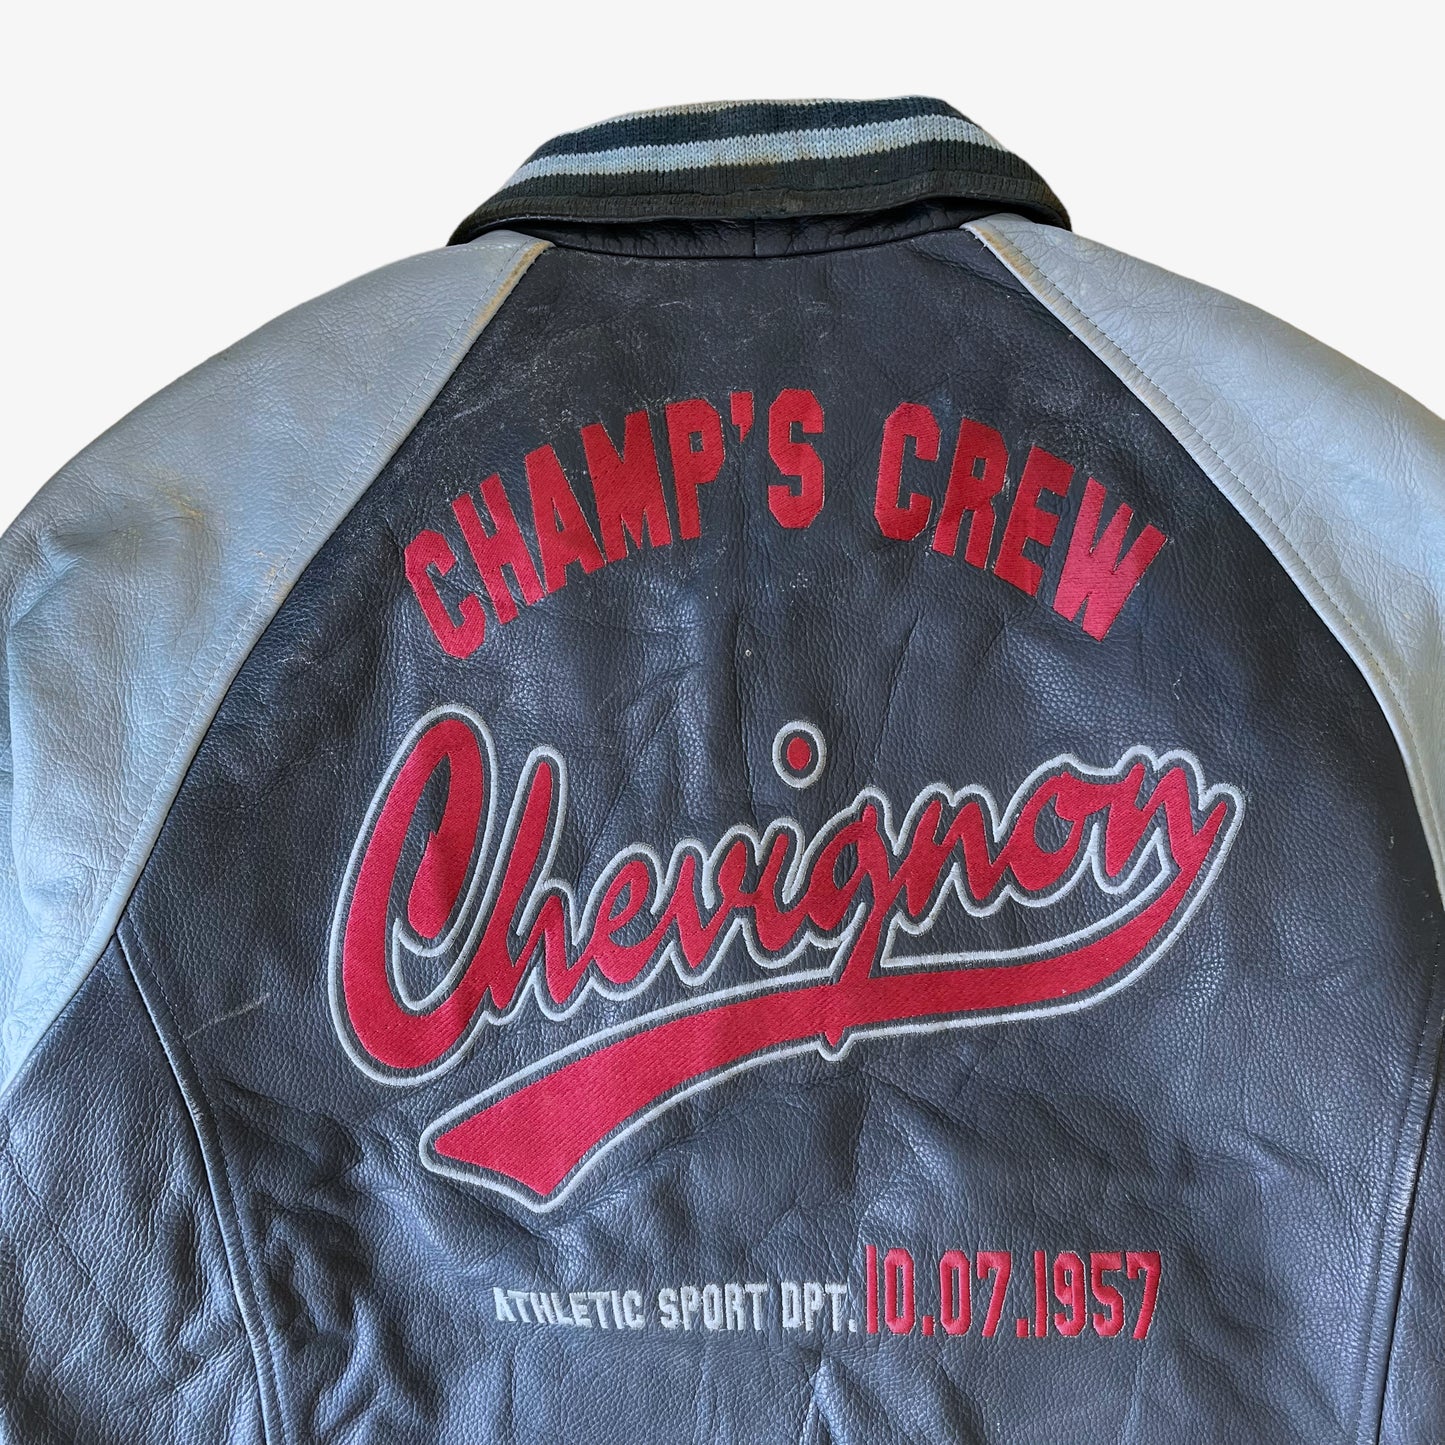 Vintage 90s Chevignon Champs Crew Blue Leather Varsity Jacket Back Logo - Casspios Dream